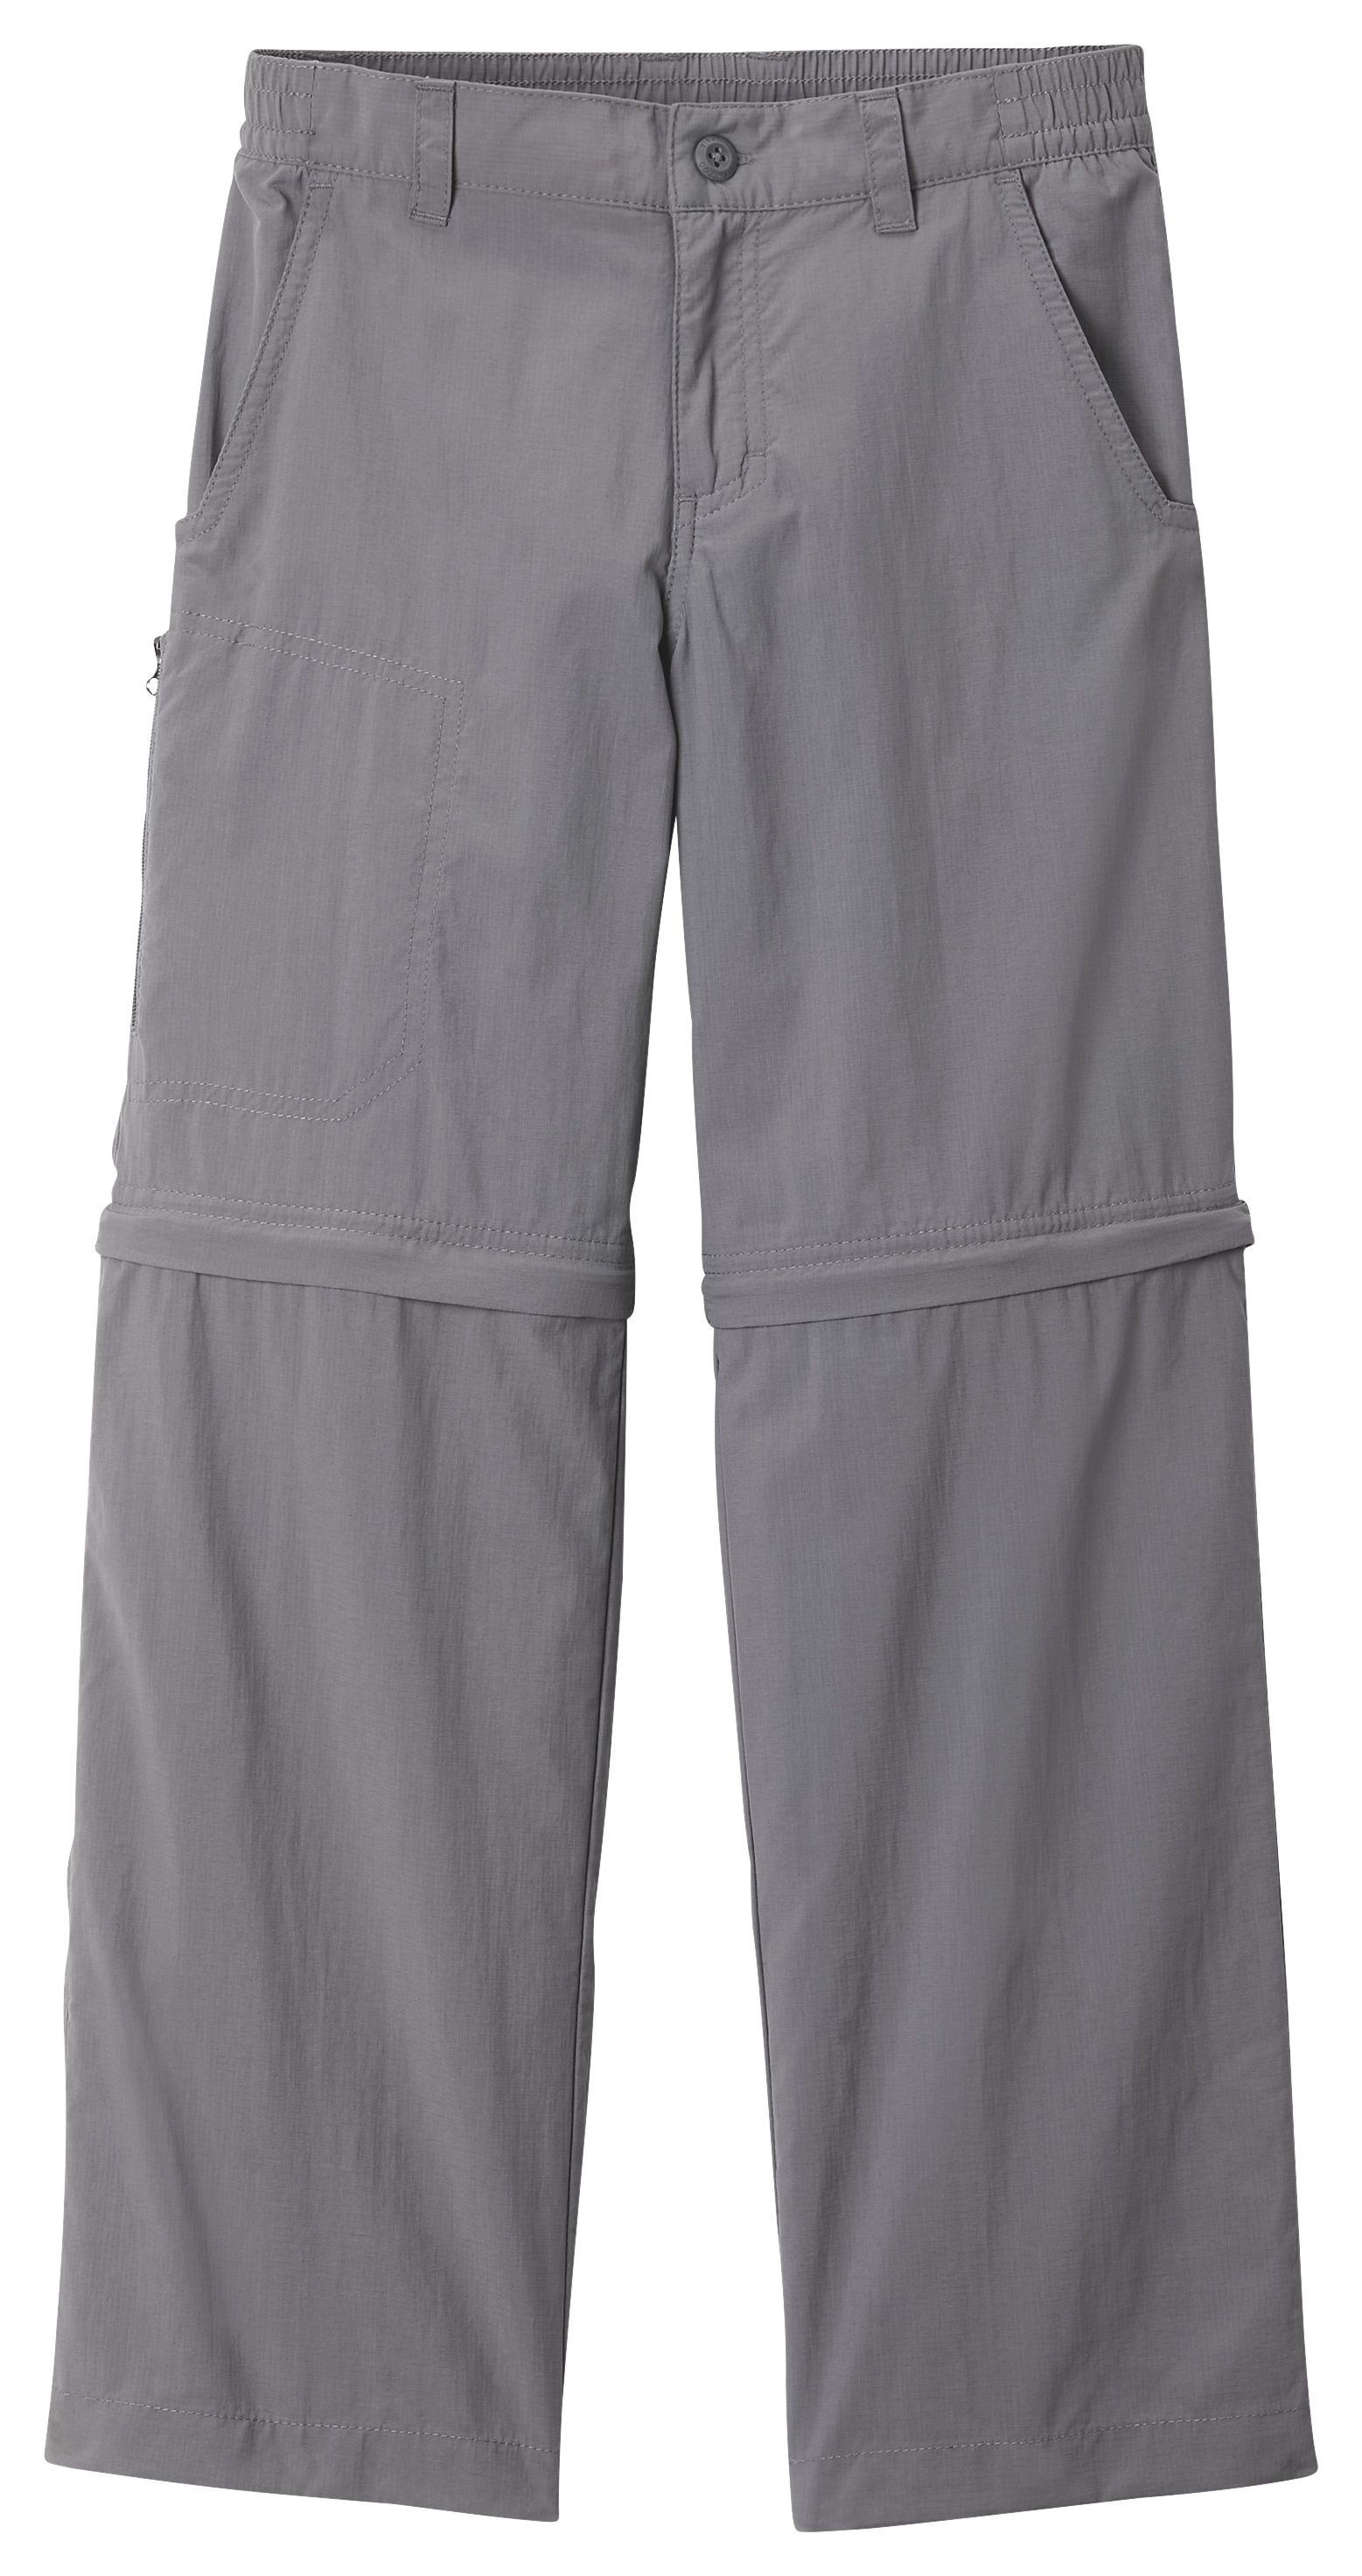 Columbia Silver Ridge IV Convertible Pants for Boys - Grey - XS